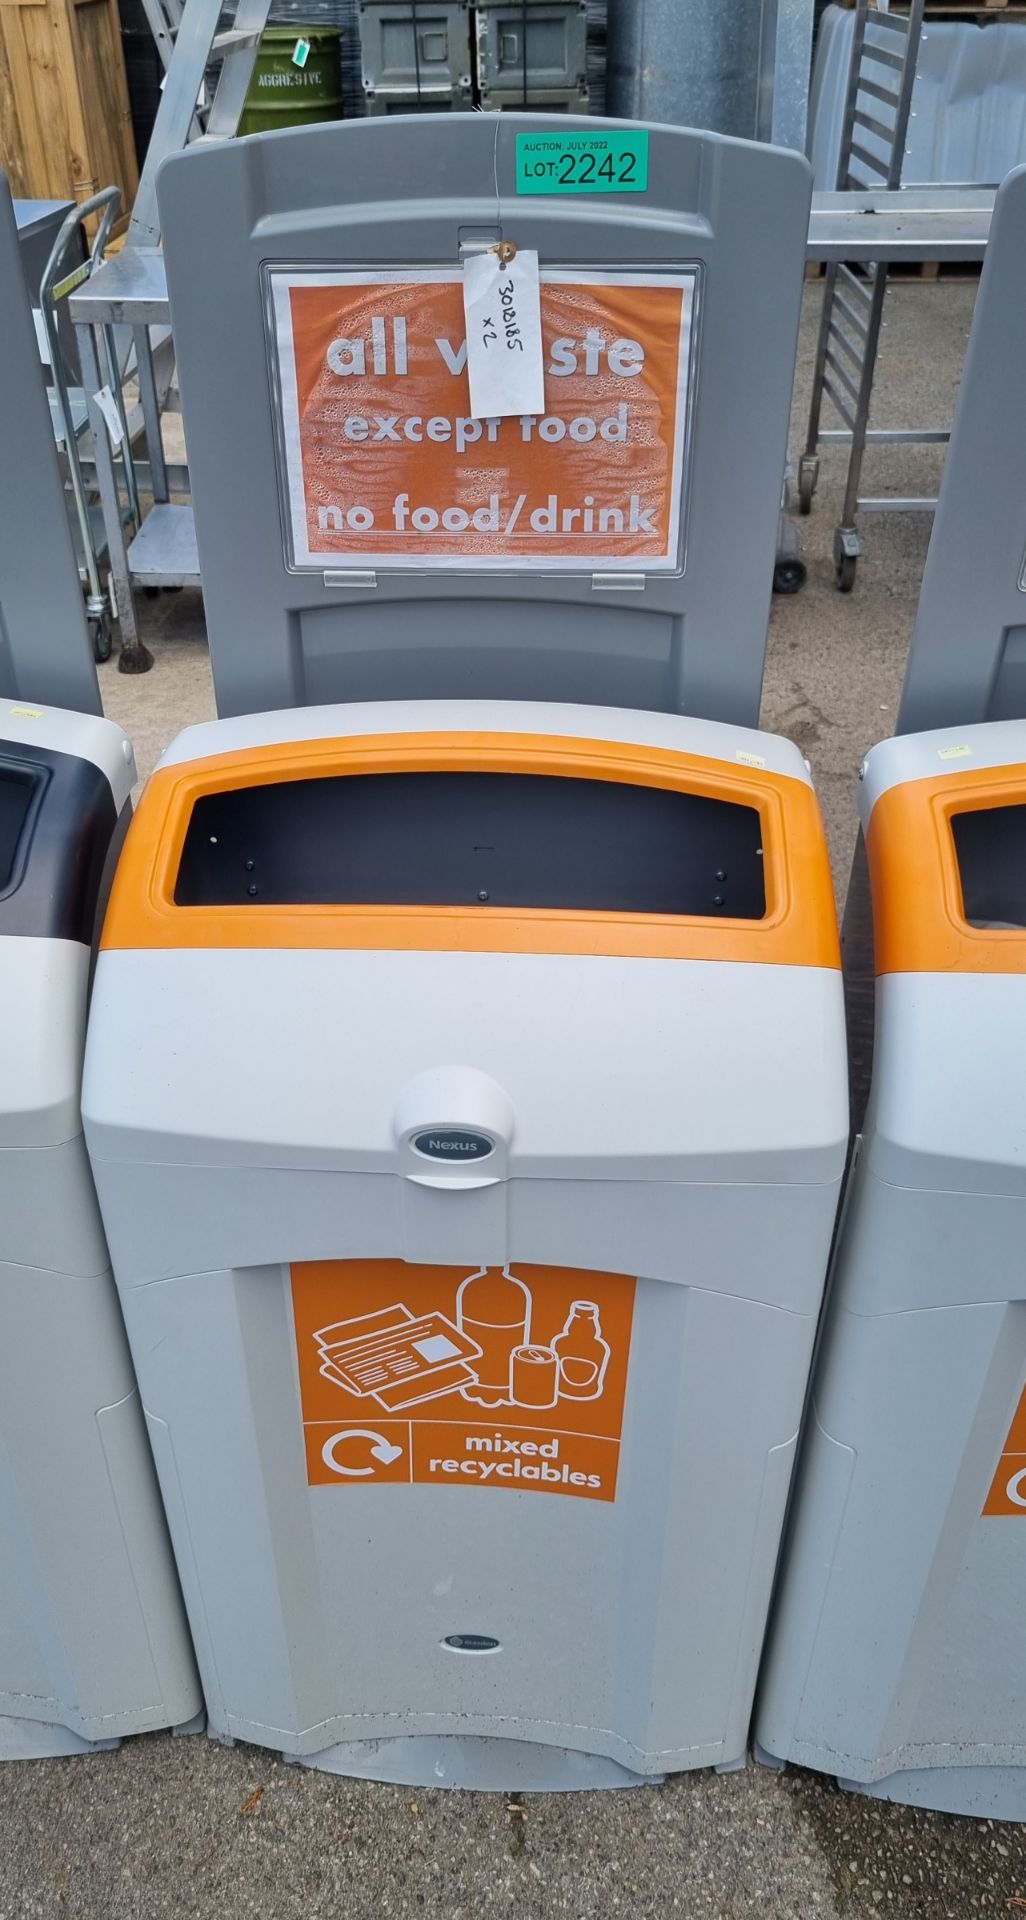 Plastic general waste bin - orange and grey